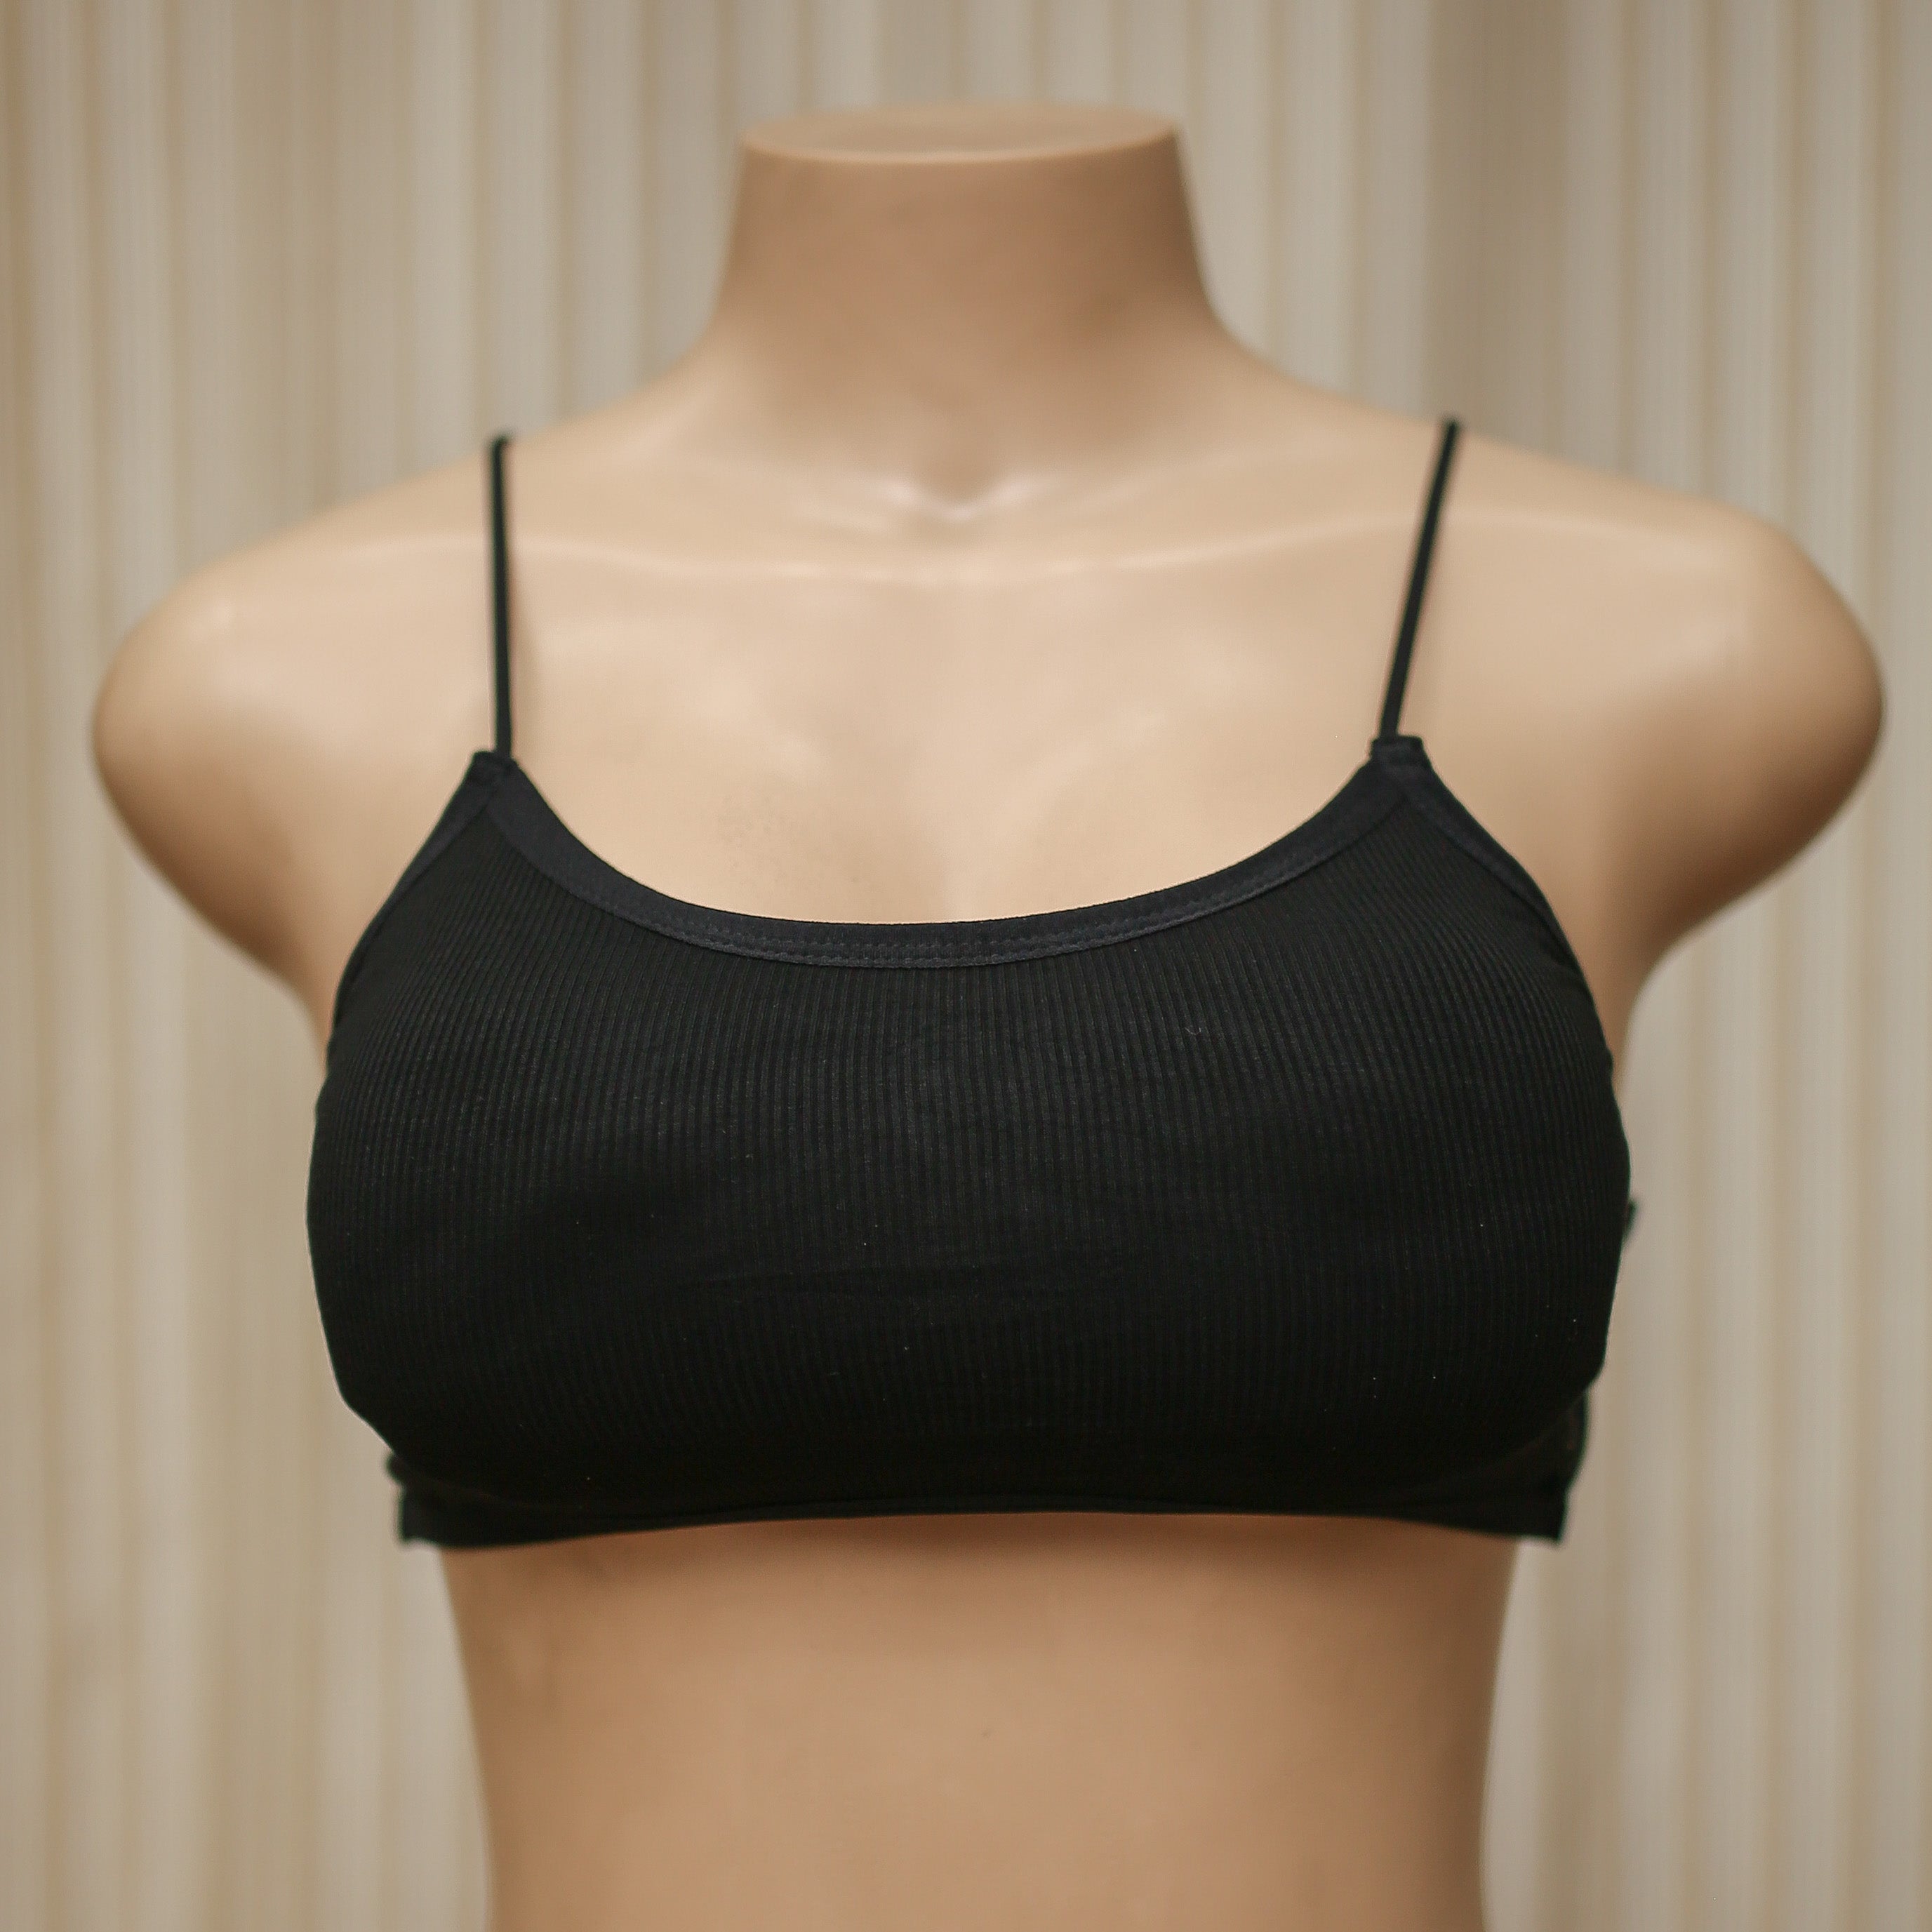 Backless free size bra